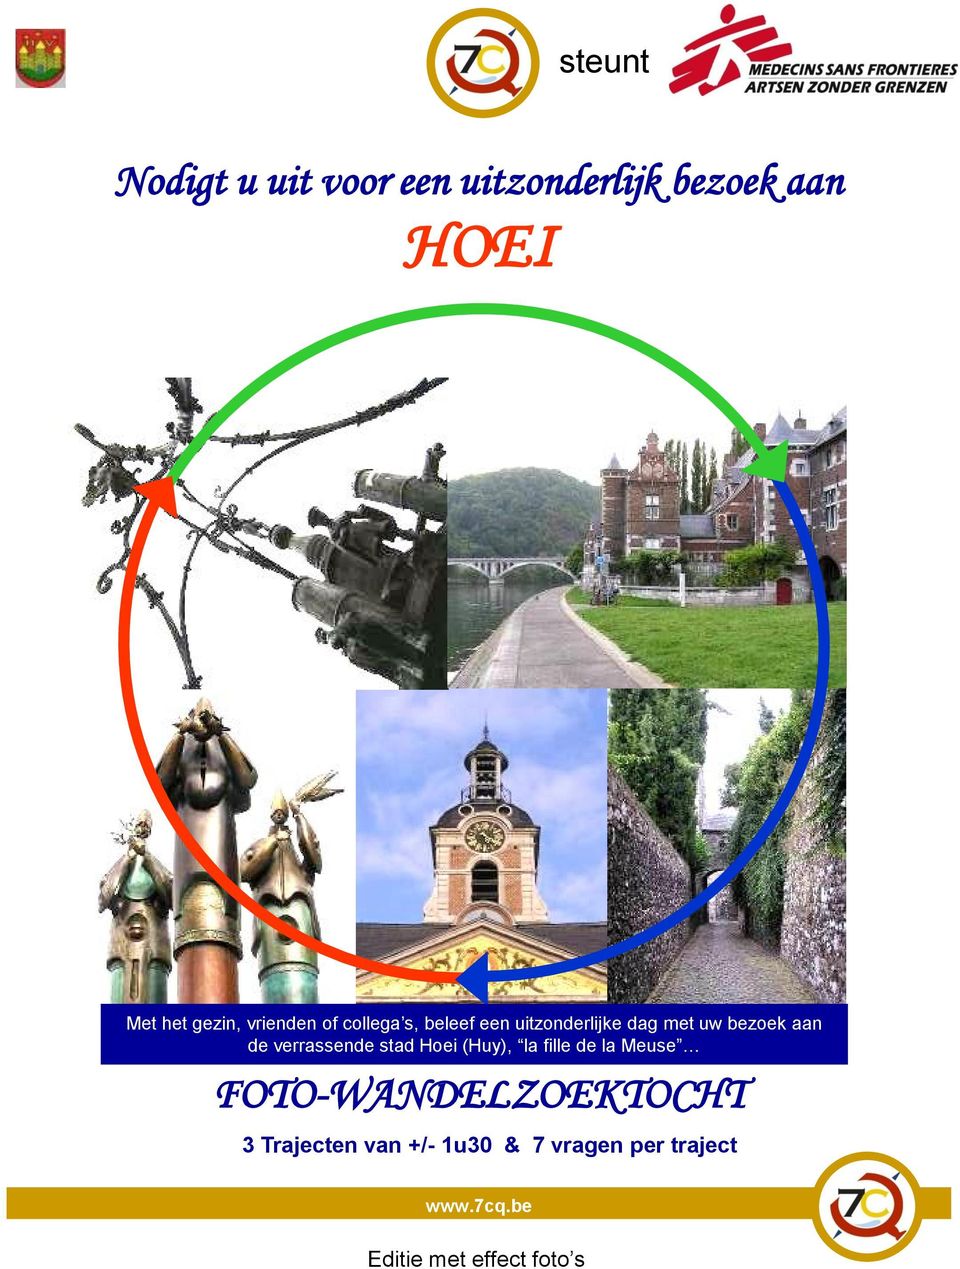 bezoek aan de verrassende stad Hoei (Huy), la fille de la Meuse